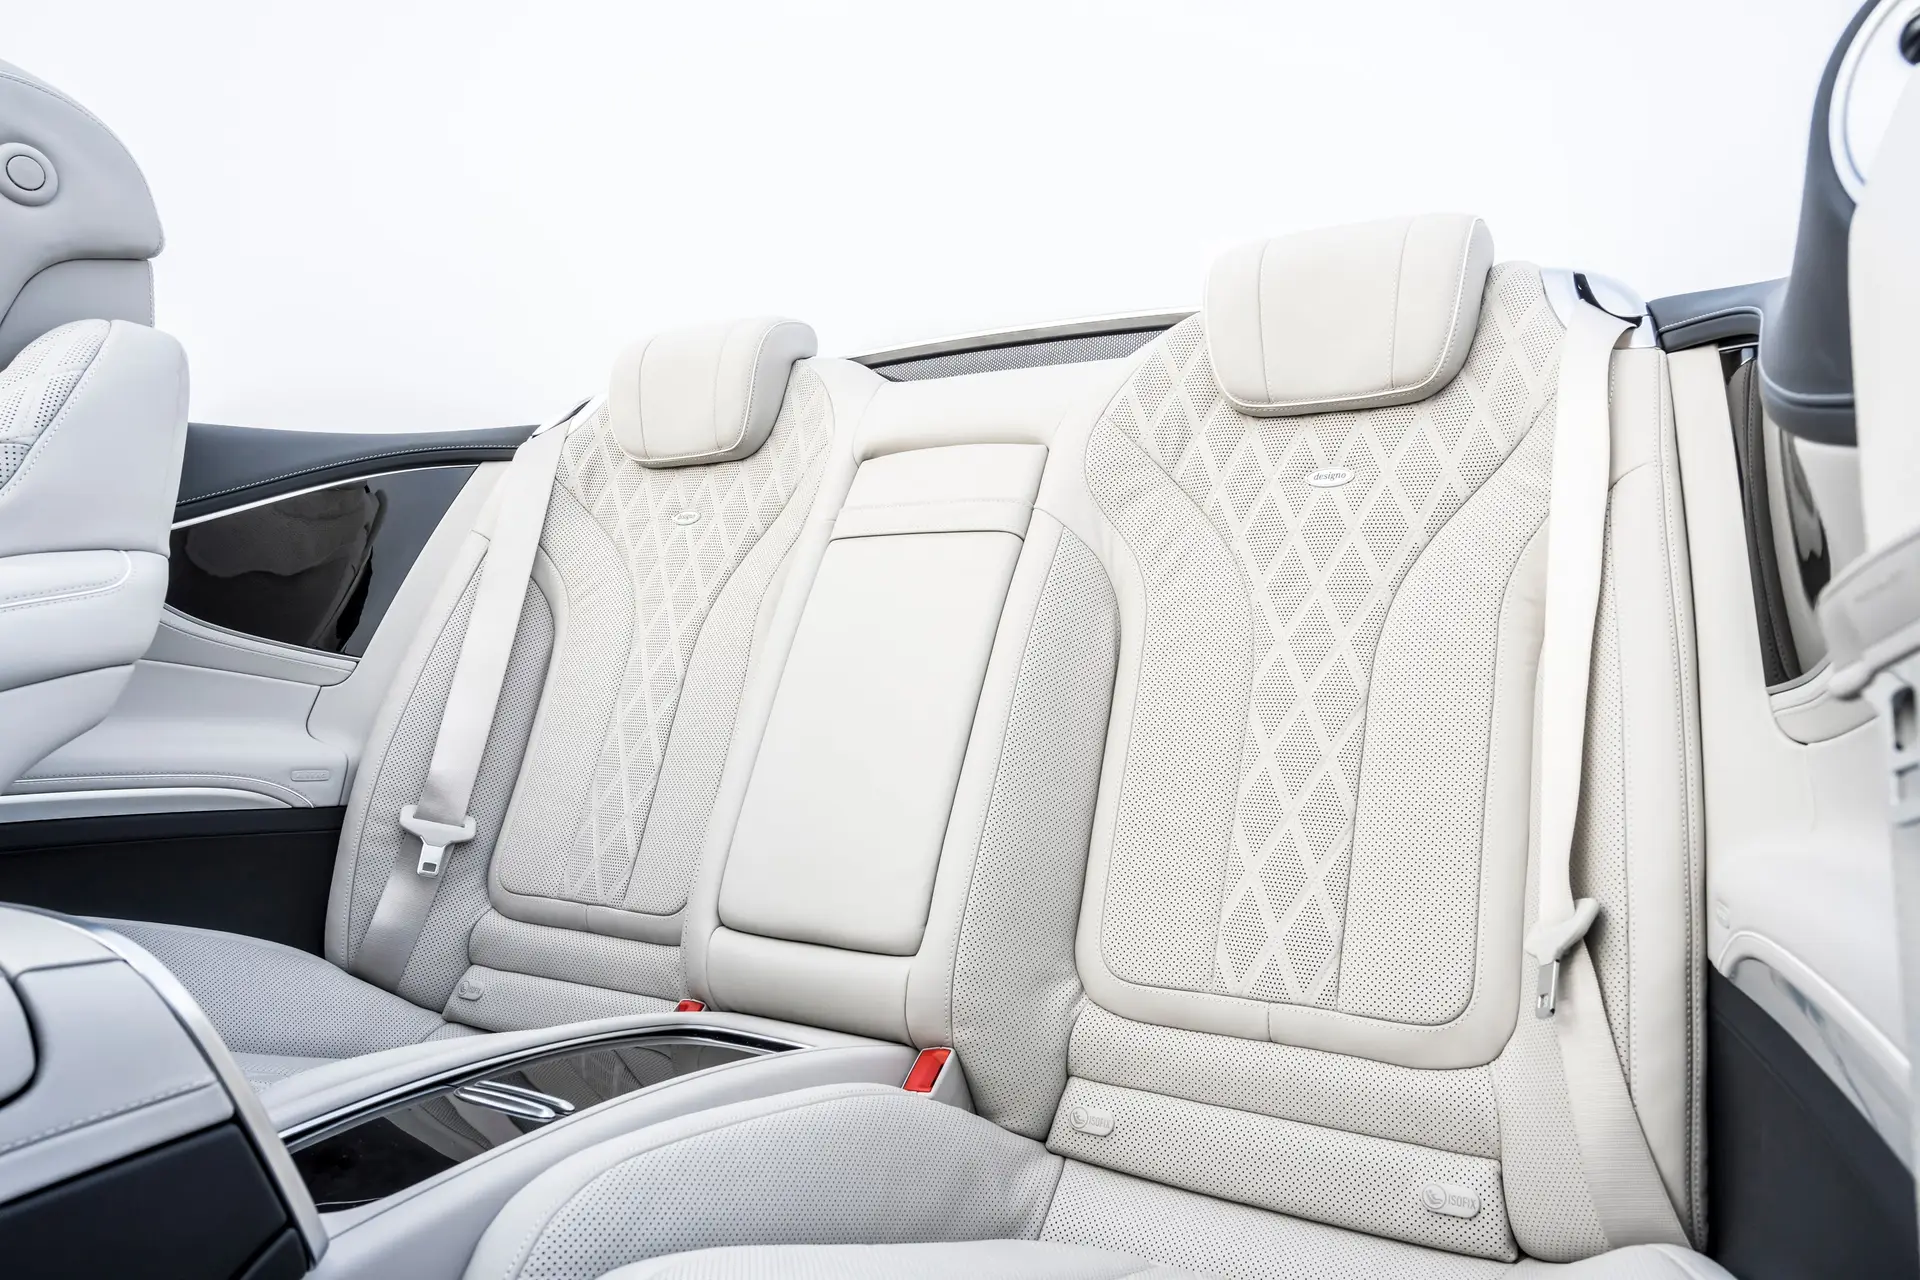 Mercedes-Benz S-Class Cabriolet (2016-2021) Review: interior close up photo of the Mercedes Benz S-Class Cabriolet rear seats